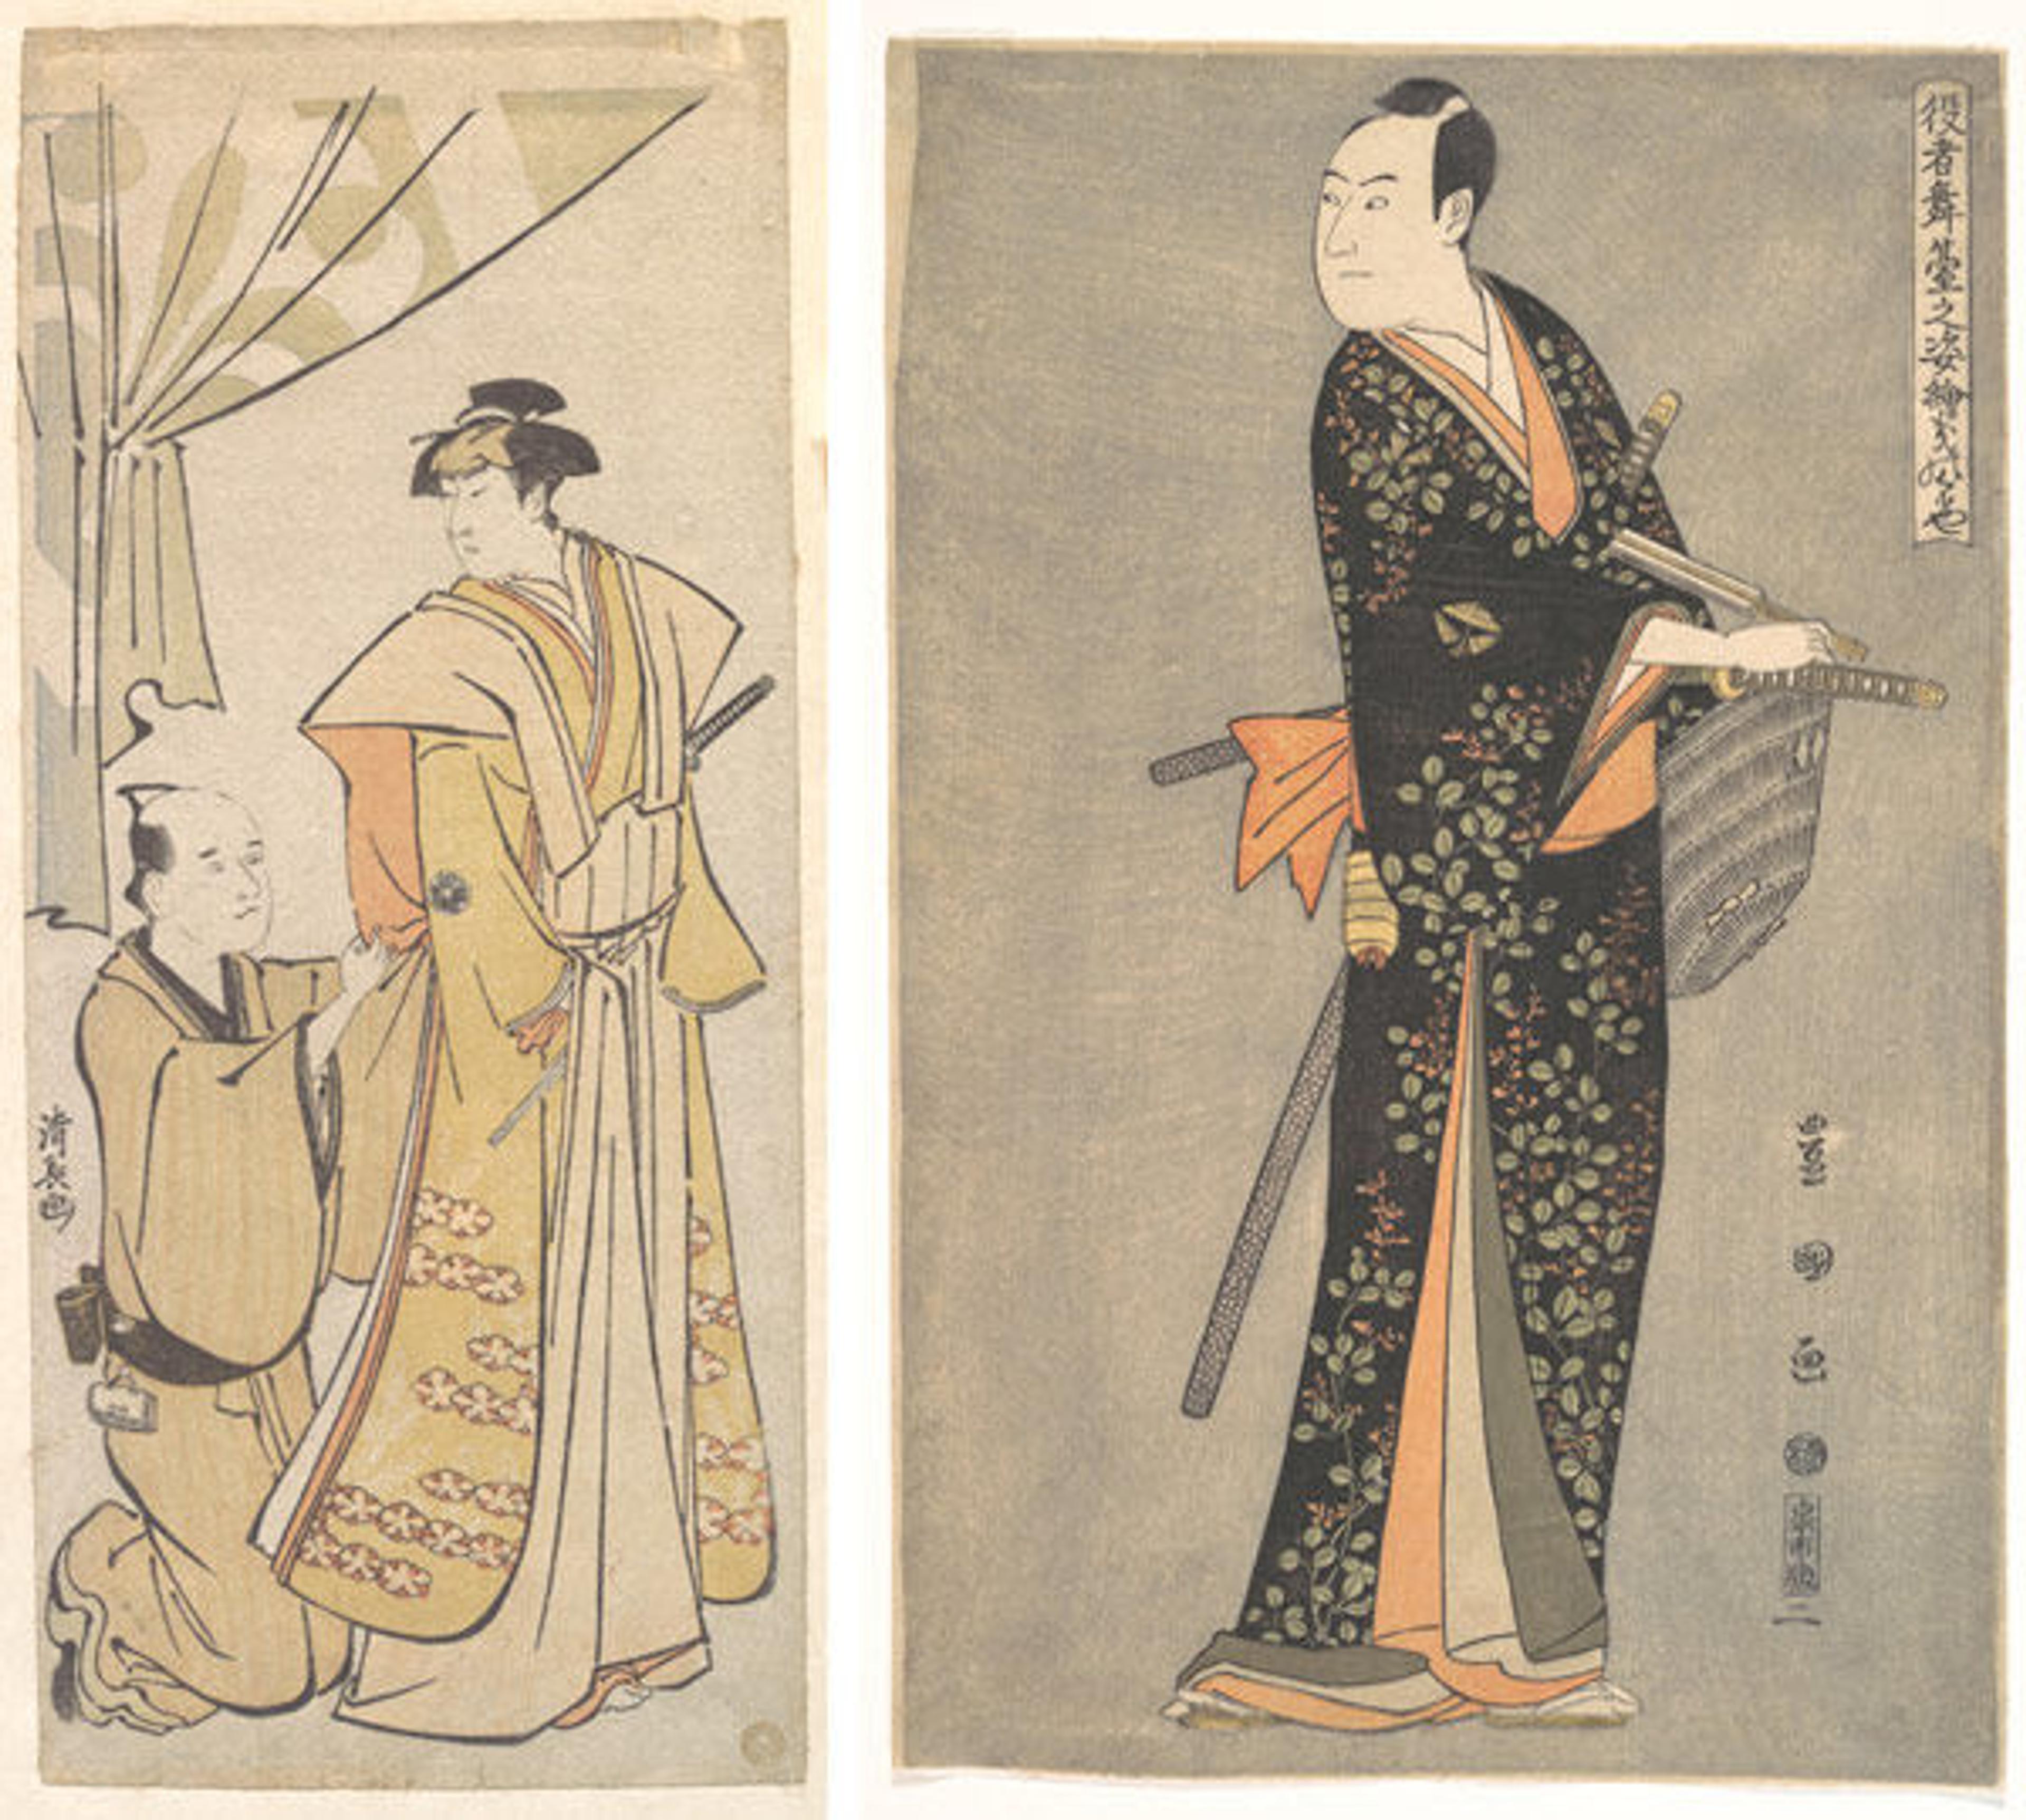 Left: Torii Kiyonaga (Japanese, 1752–1815) | The Actor Nakamura Rikō I with an Attendant, ca. 1784 | JP727 | Right: Utagawa Toyokuni I (Japanese, 1769–1825) | The Actor Sawamura Sōjūrō 3rd (Kinokuniya) from the series Portraits of Actors on Stage (Yakusha butai no sugata-e), ca. 1794 | JP1531